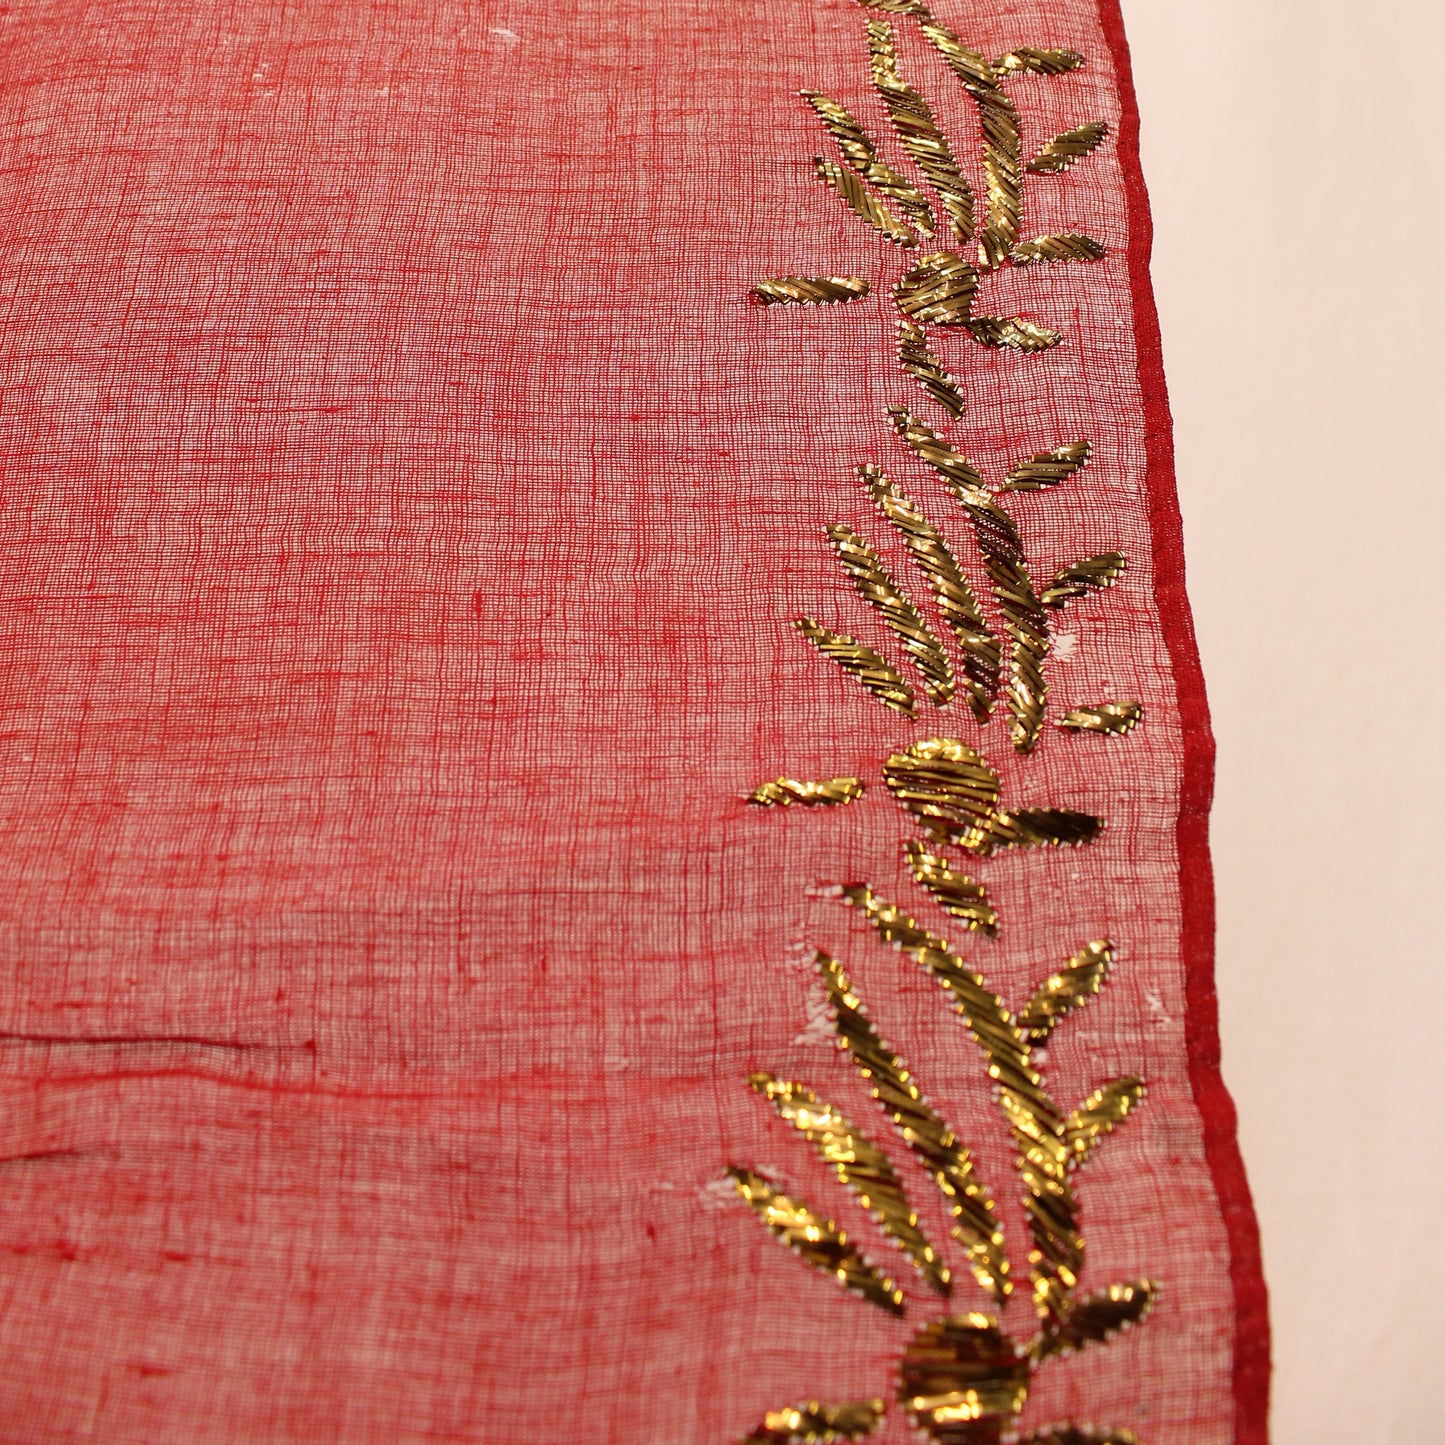 Antique Ottoman Metallic Embroidery Dowry Bag Bohca